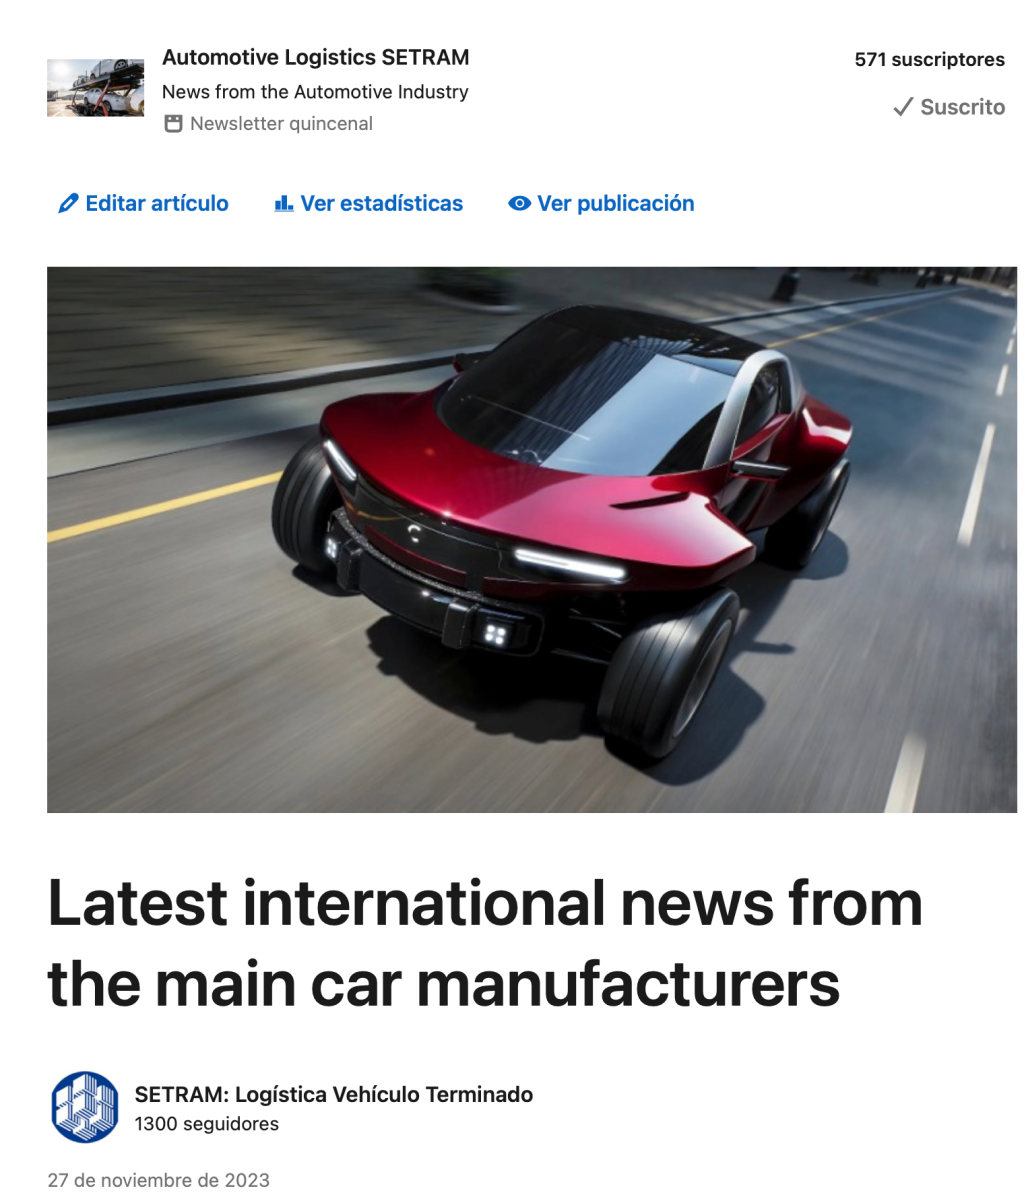 SETRAM Newsletter on Linkedin: Latest international news from the main car manufacturers